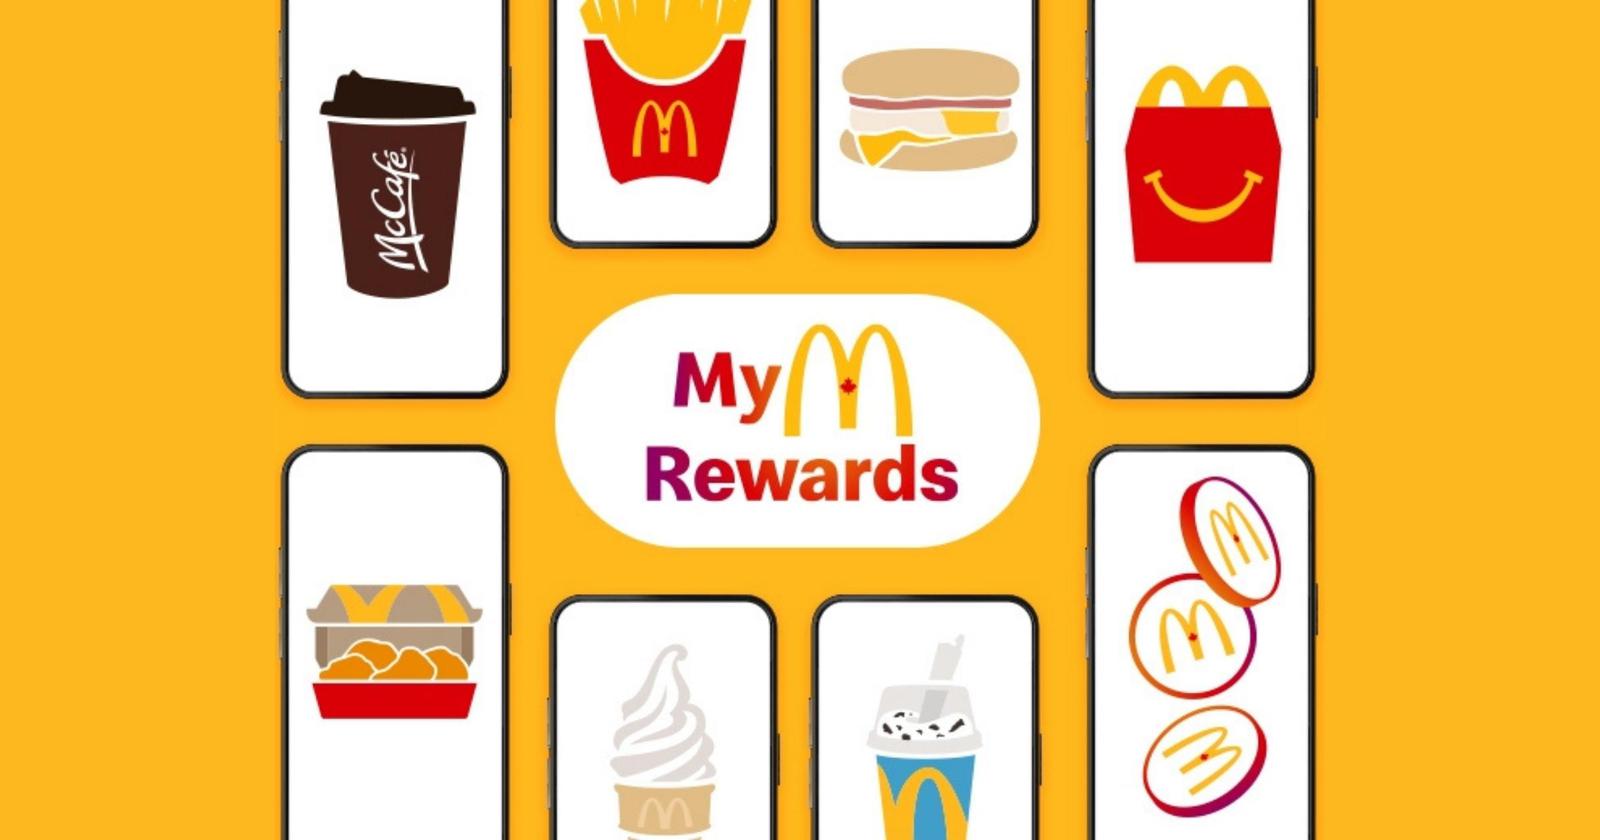 mymcdonald's rewards featured